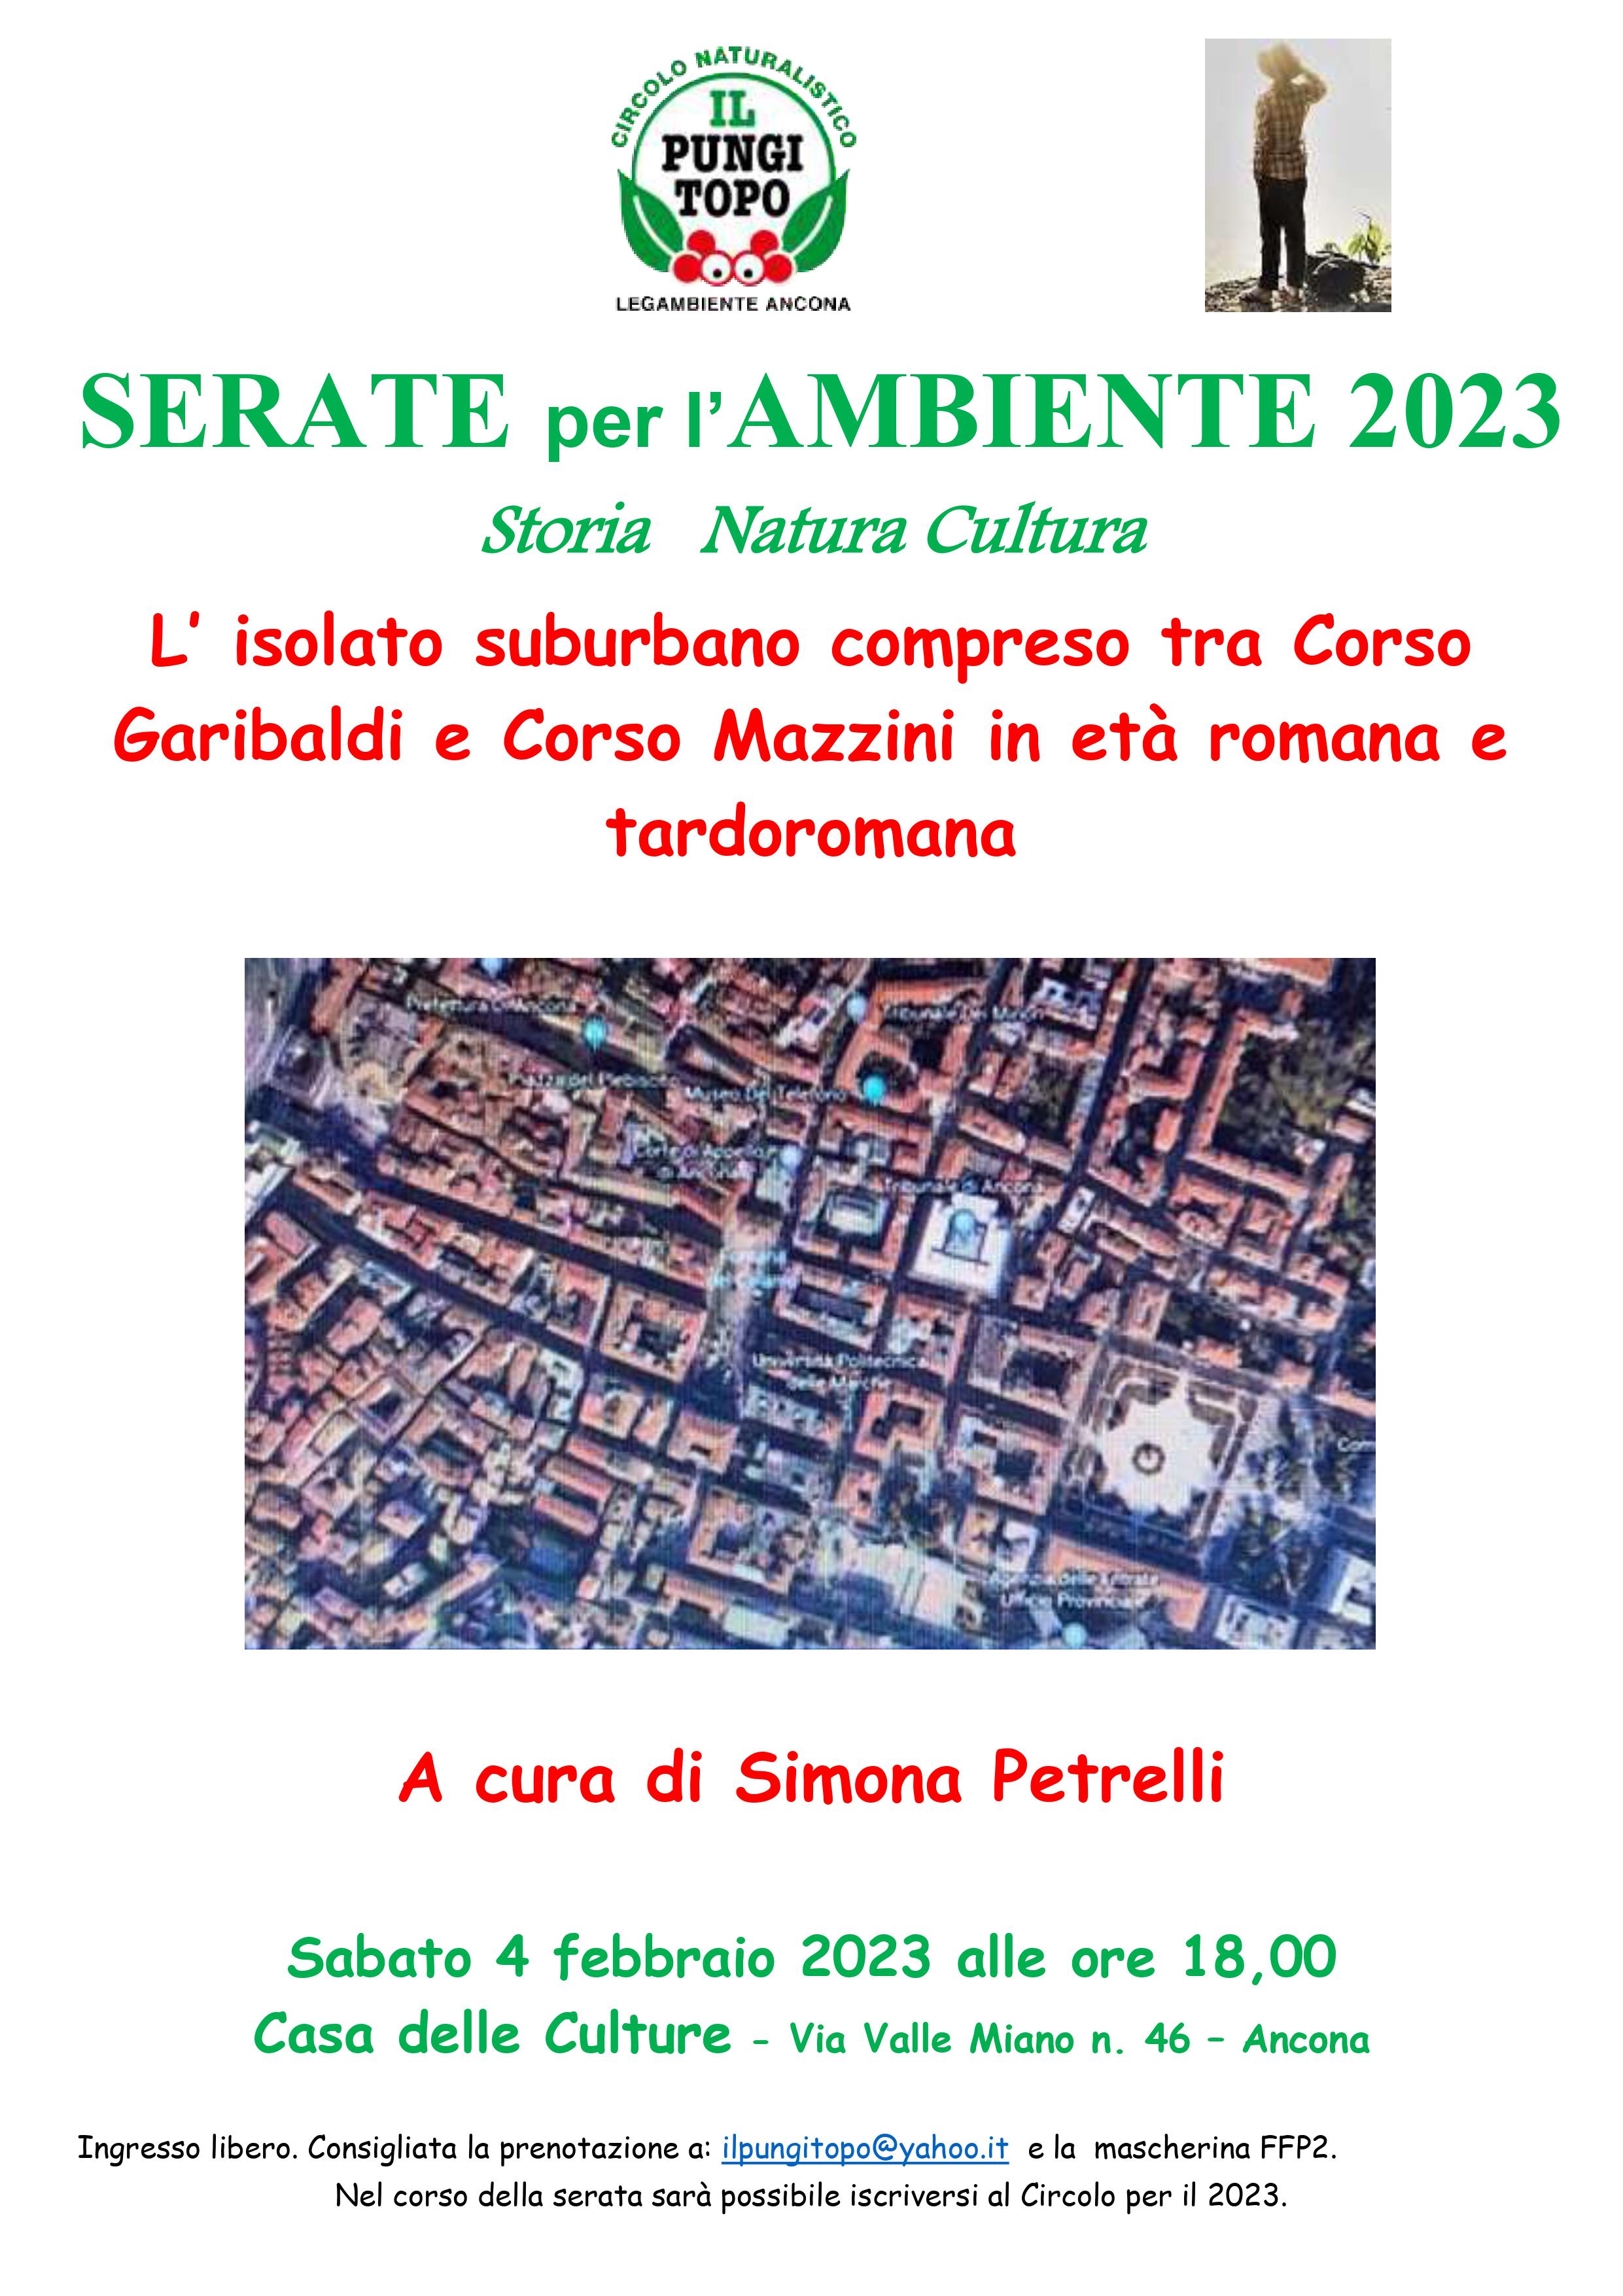 Serate ambiente 2023 4 febbraio Simona Petrelli